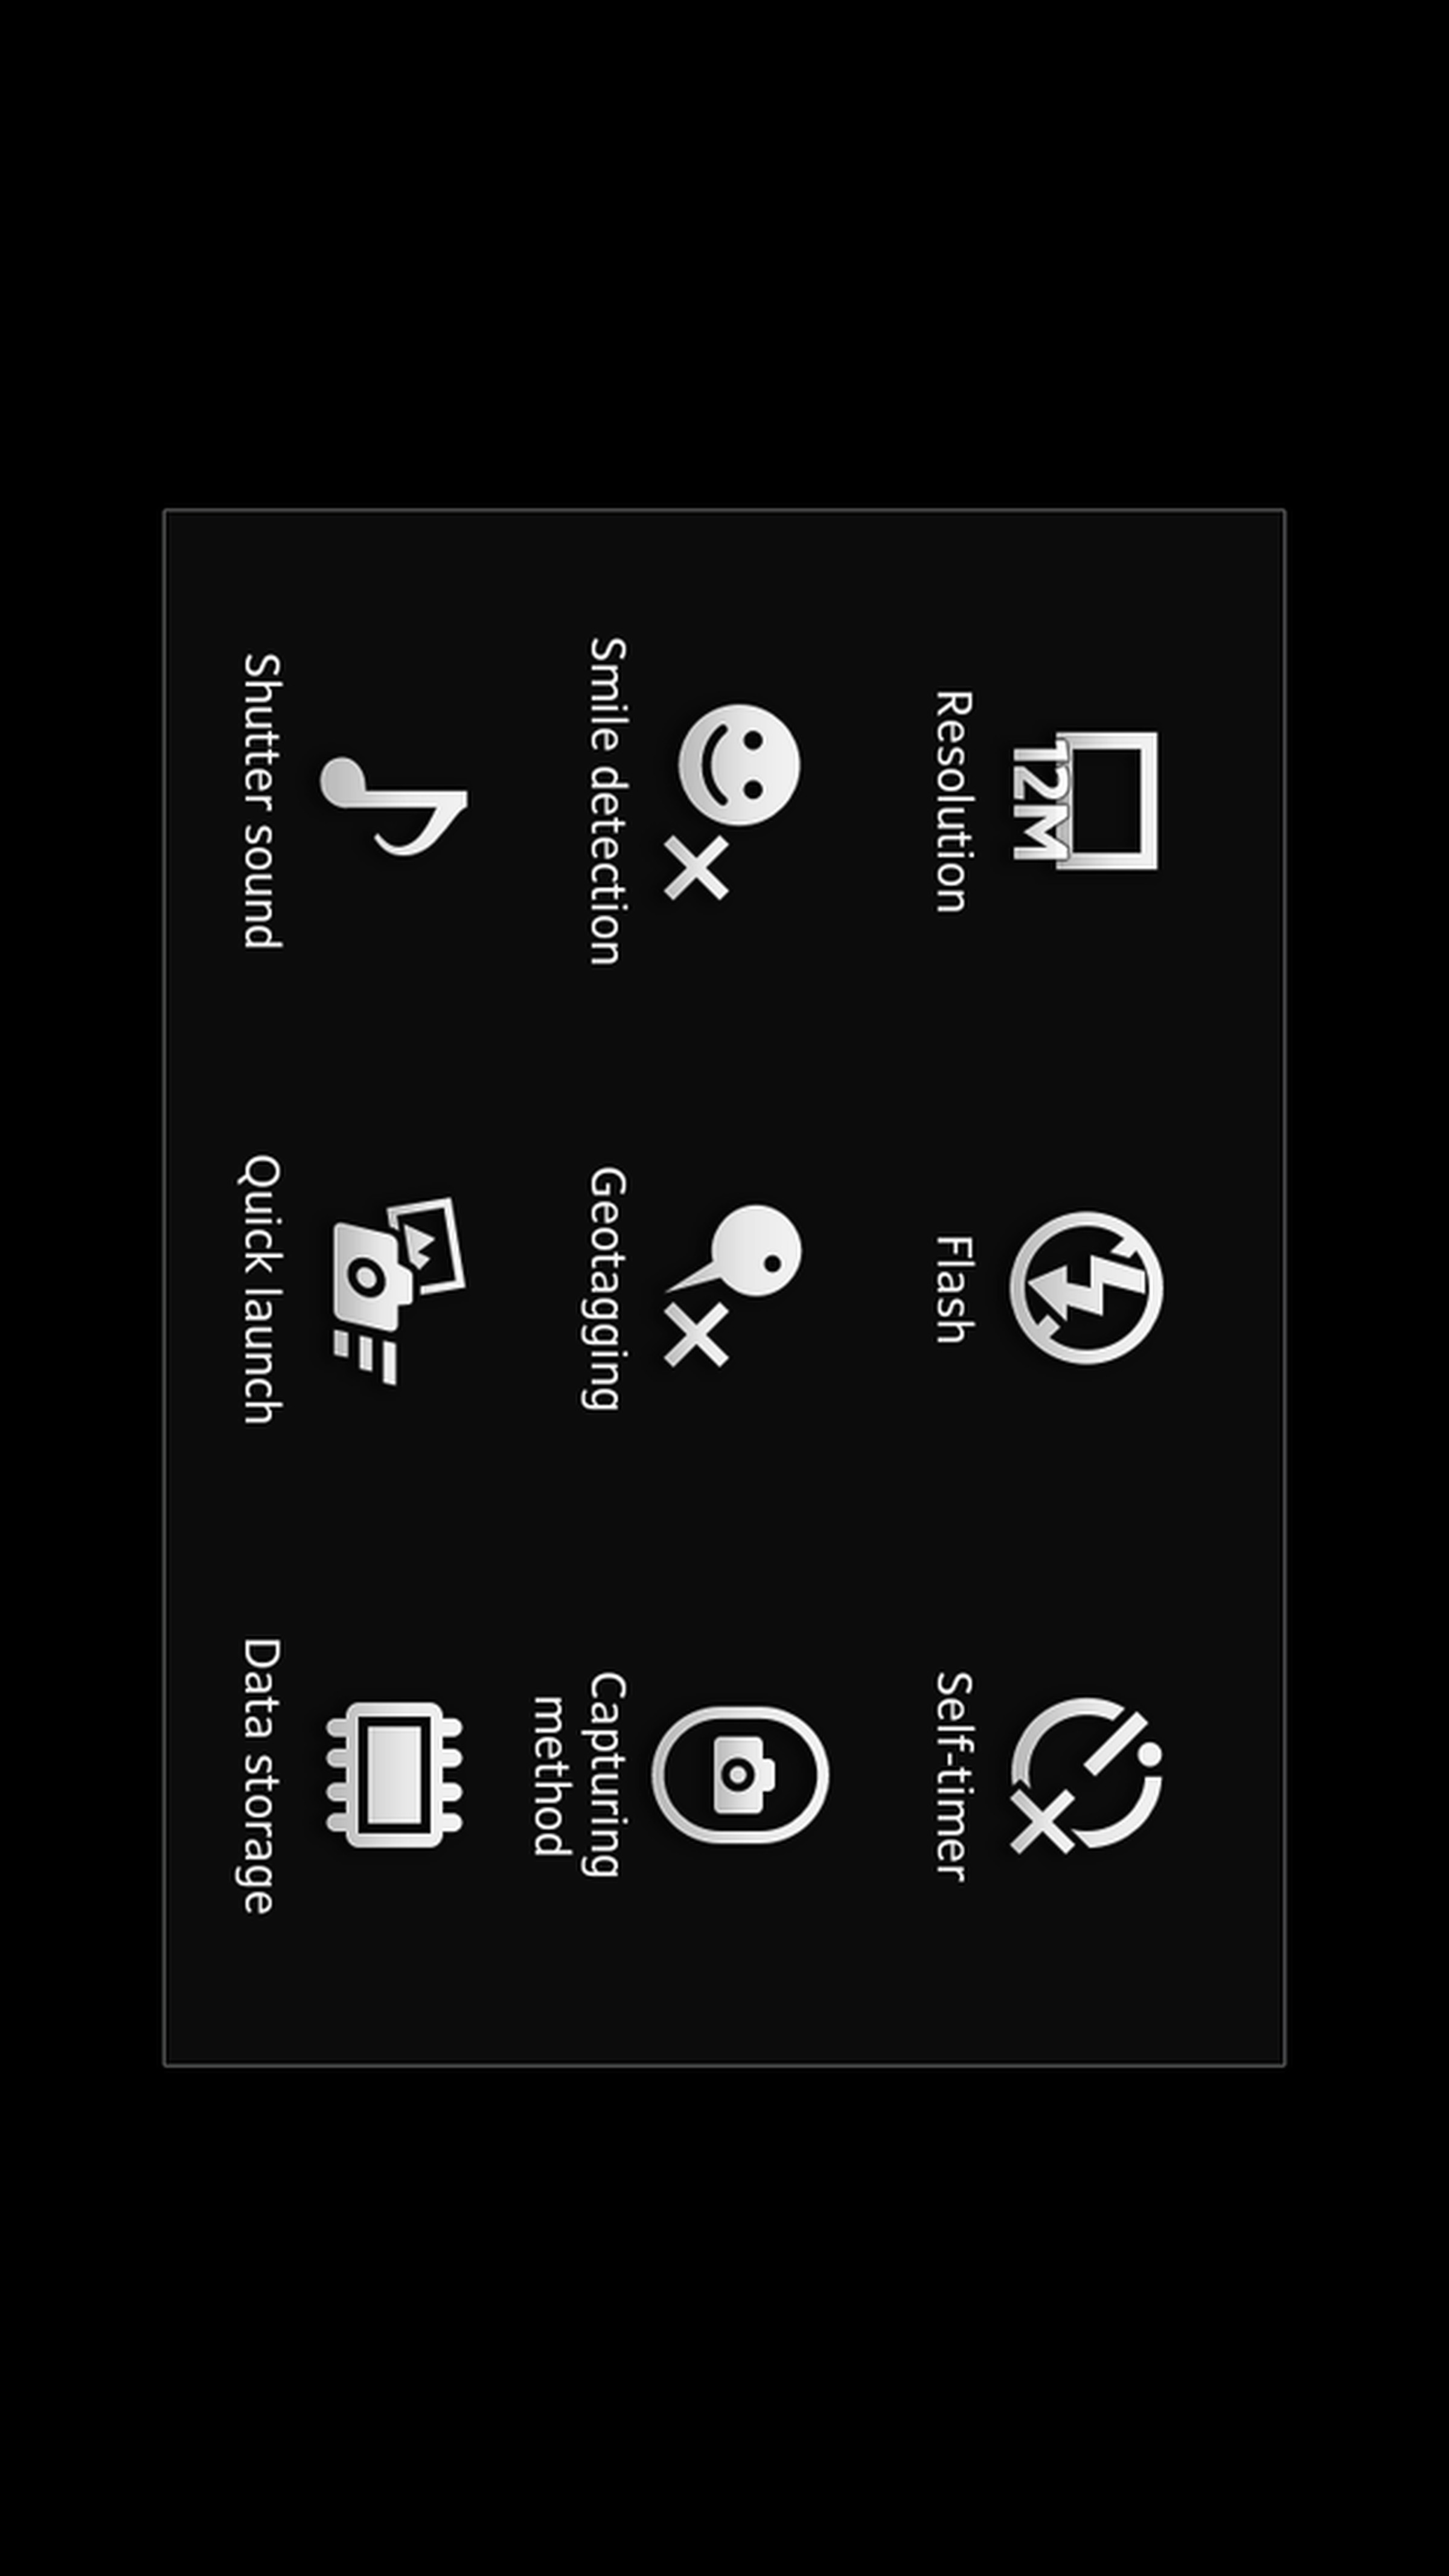 Sony Xperia ion screenshot gallery